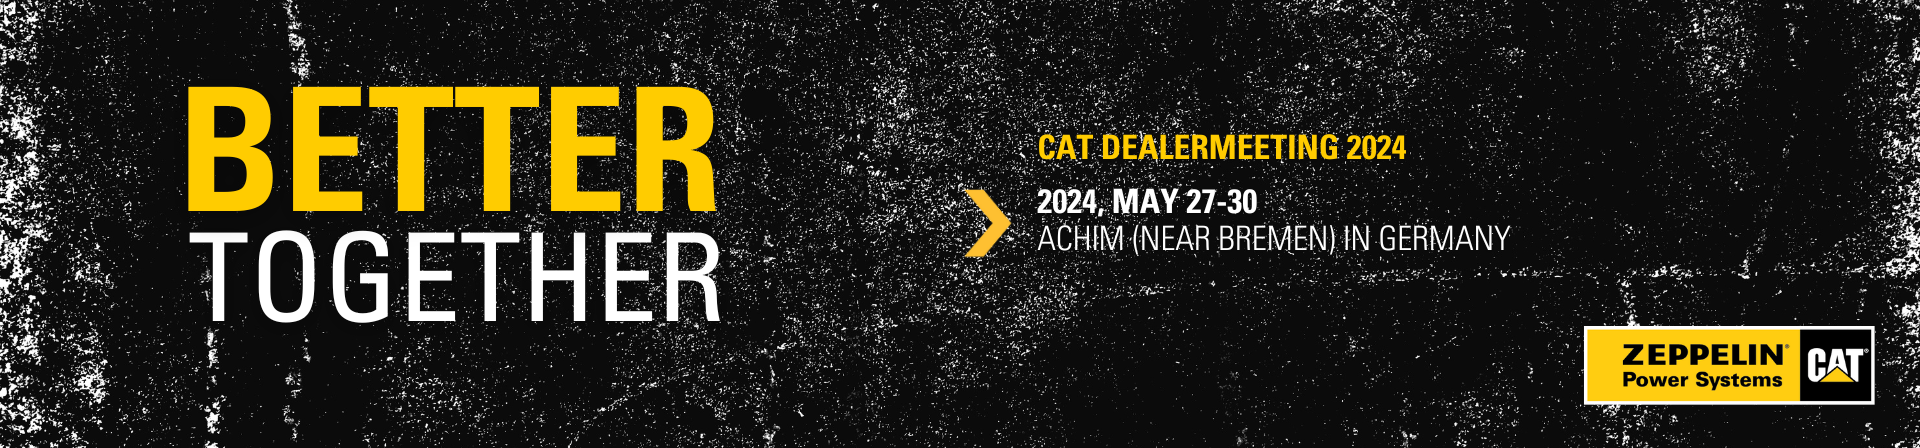 Cat-Used-Dealermeeting-2024-Header-1920x448px.png